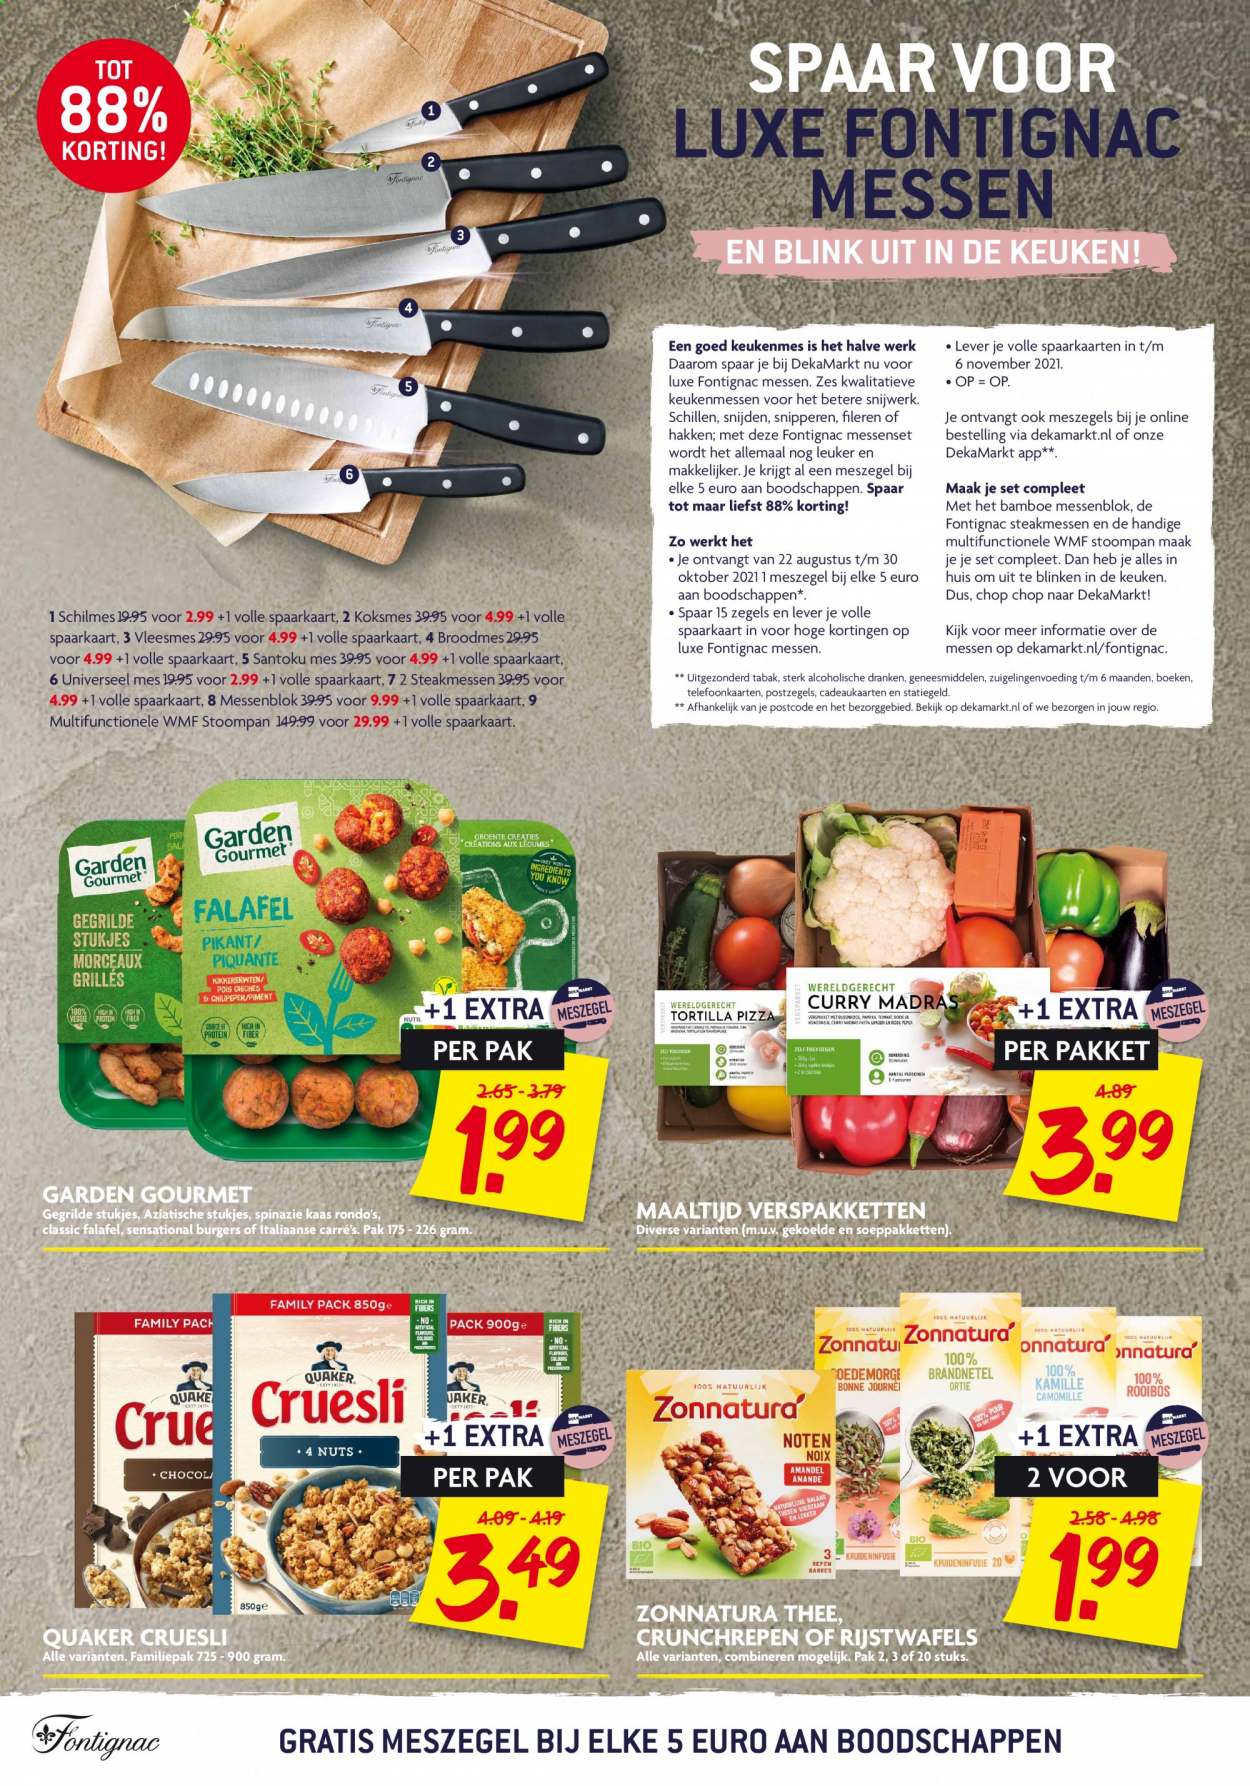 thumbnail - DekaMarkt-aanbieding - 29-8-2021 - 4-9-2021 -  producten in de aanbieding - spinazie, Falafel, kaas, messen, messenblok. Pagina 14.